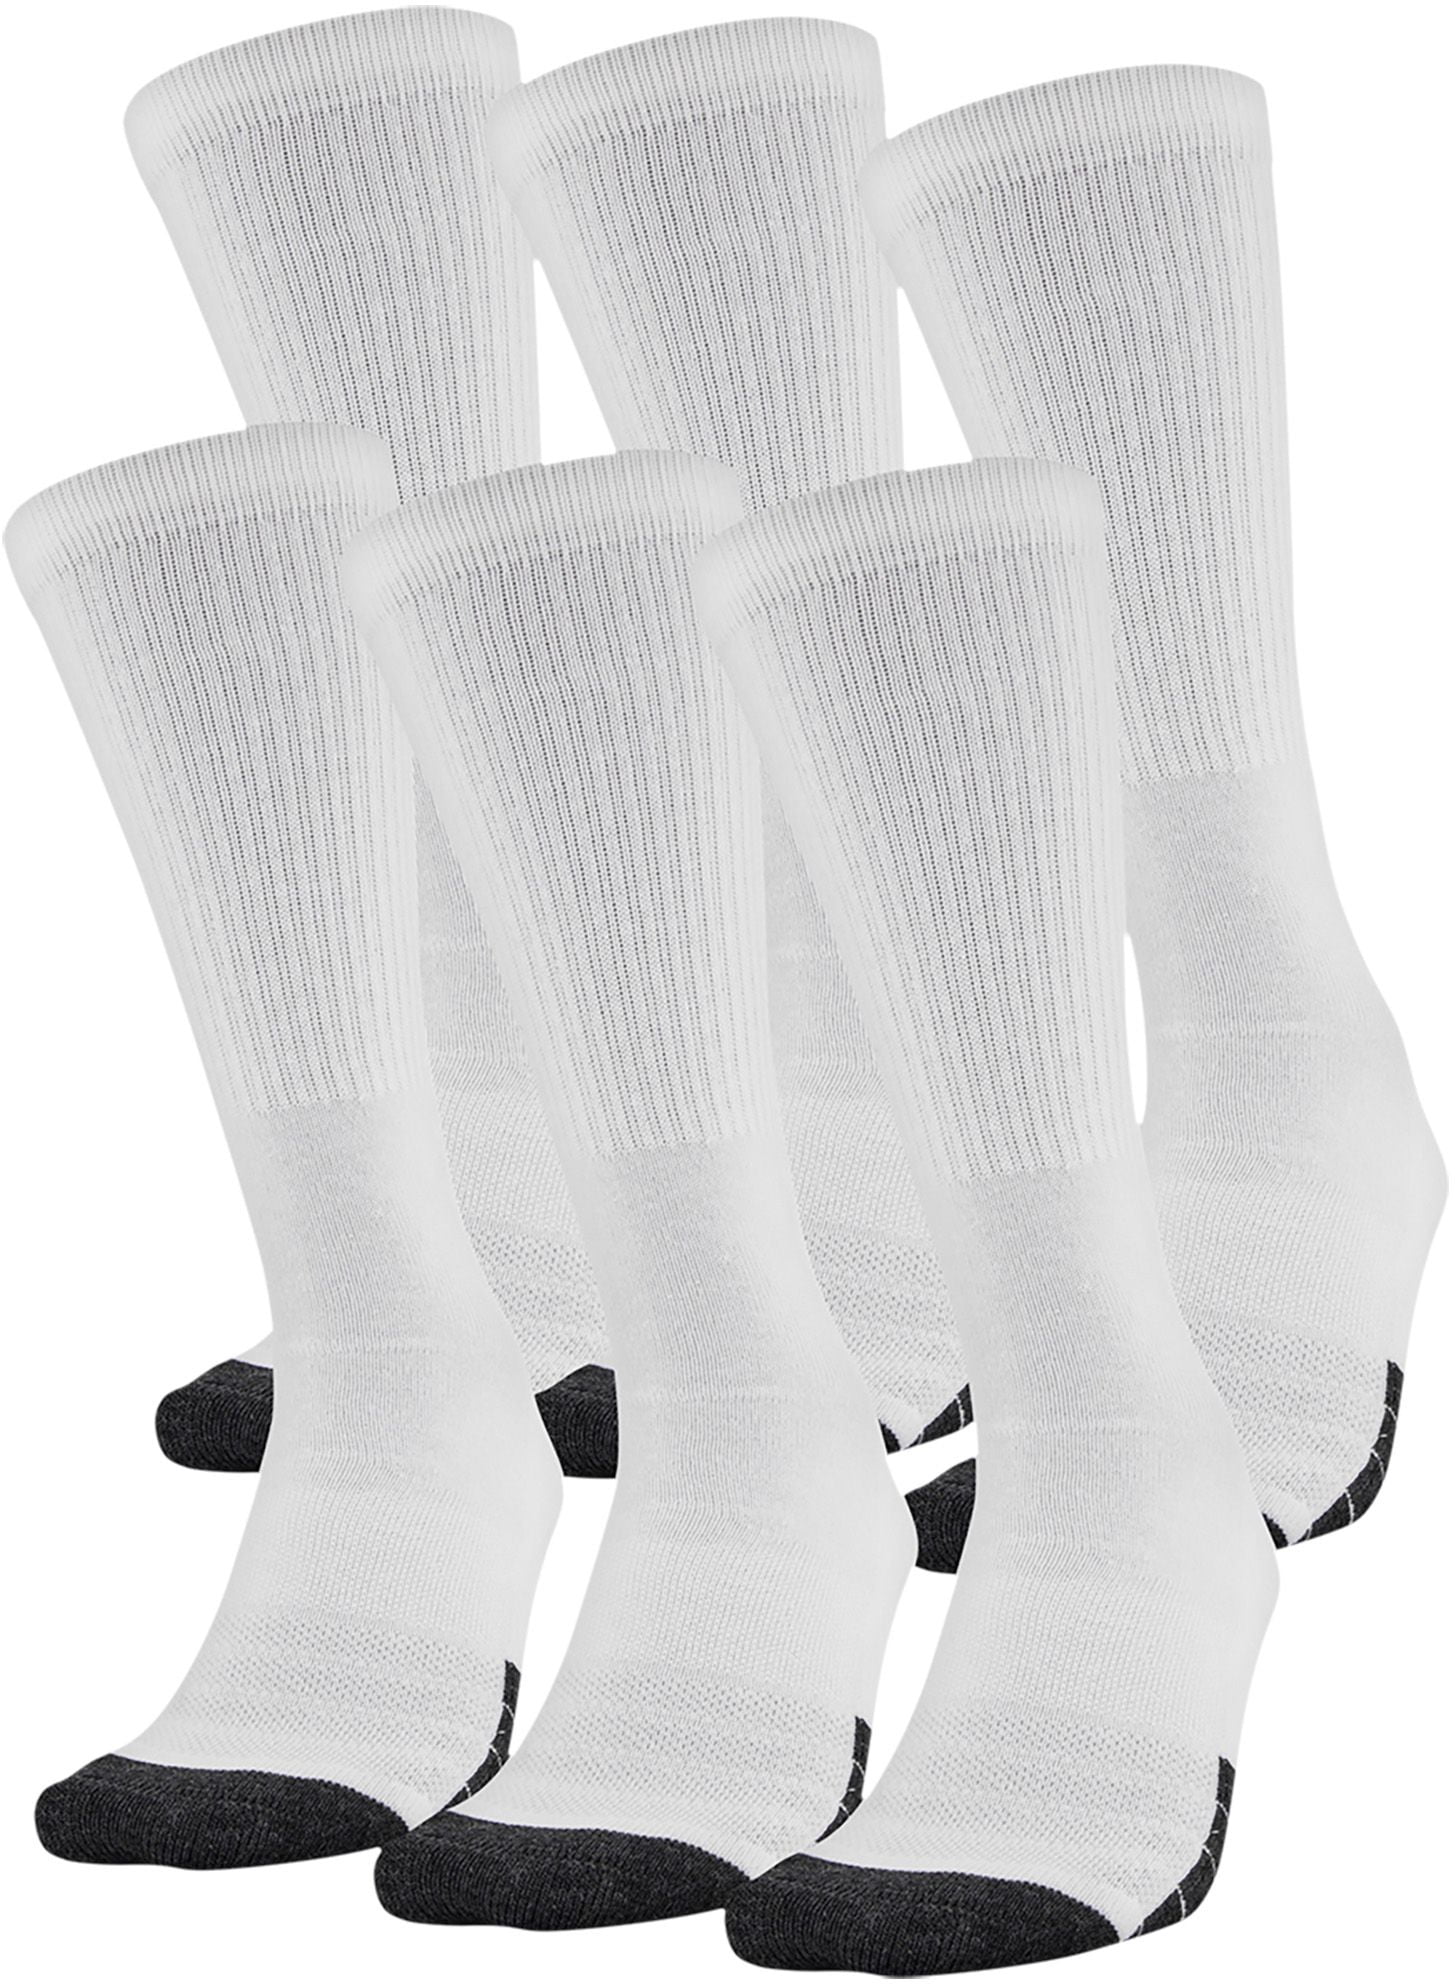 Women's black and Grey Apara Sport Footie Socks 3 Pairs of Sock Sock Size 5-11 